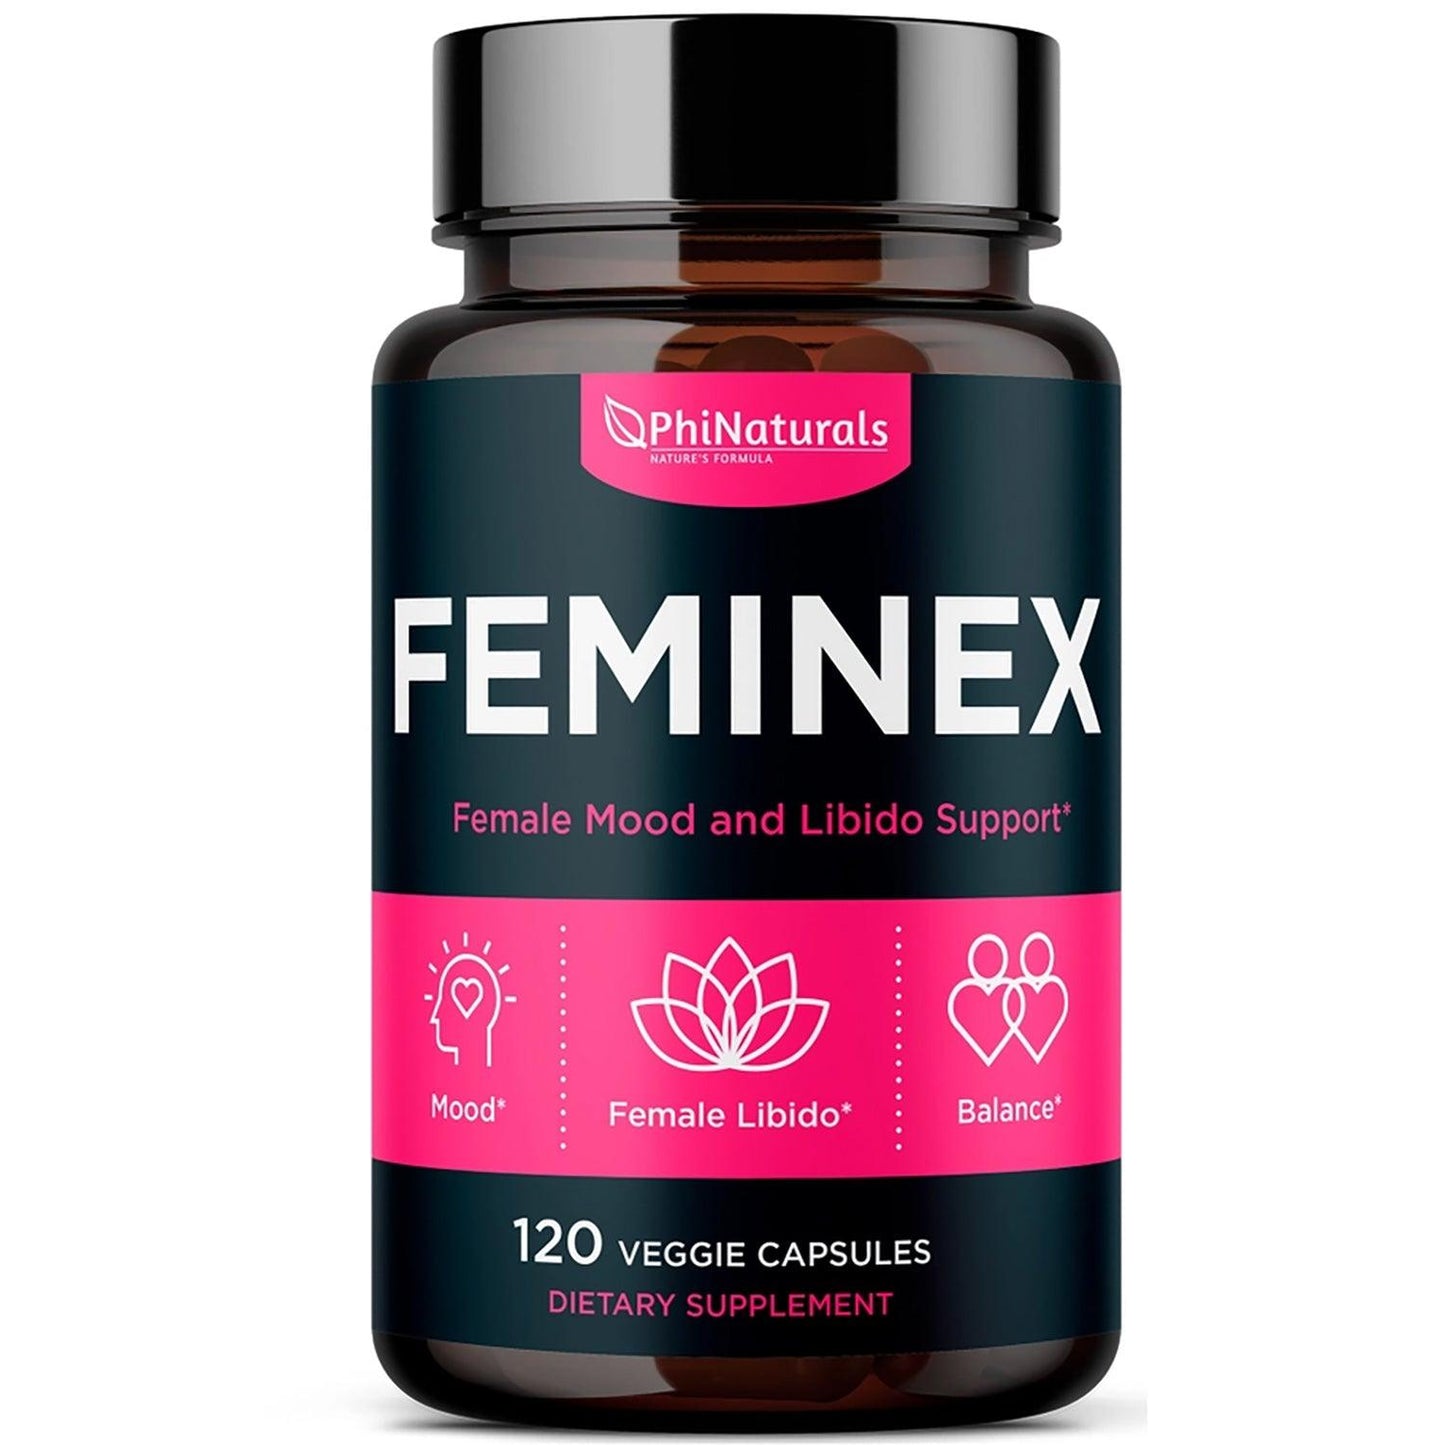 PhiNaturals FEMINEX Female Mood & Libido Support Supplement - 120 Capsules - Home Revival Shop